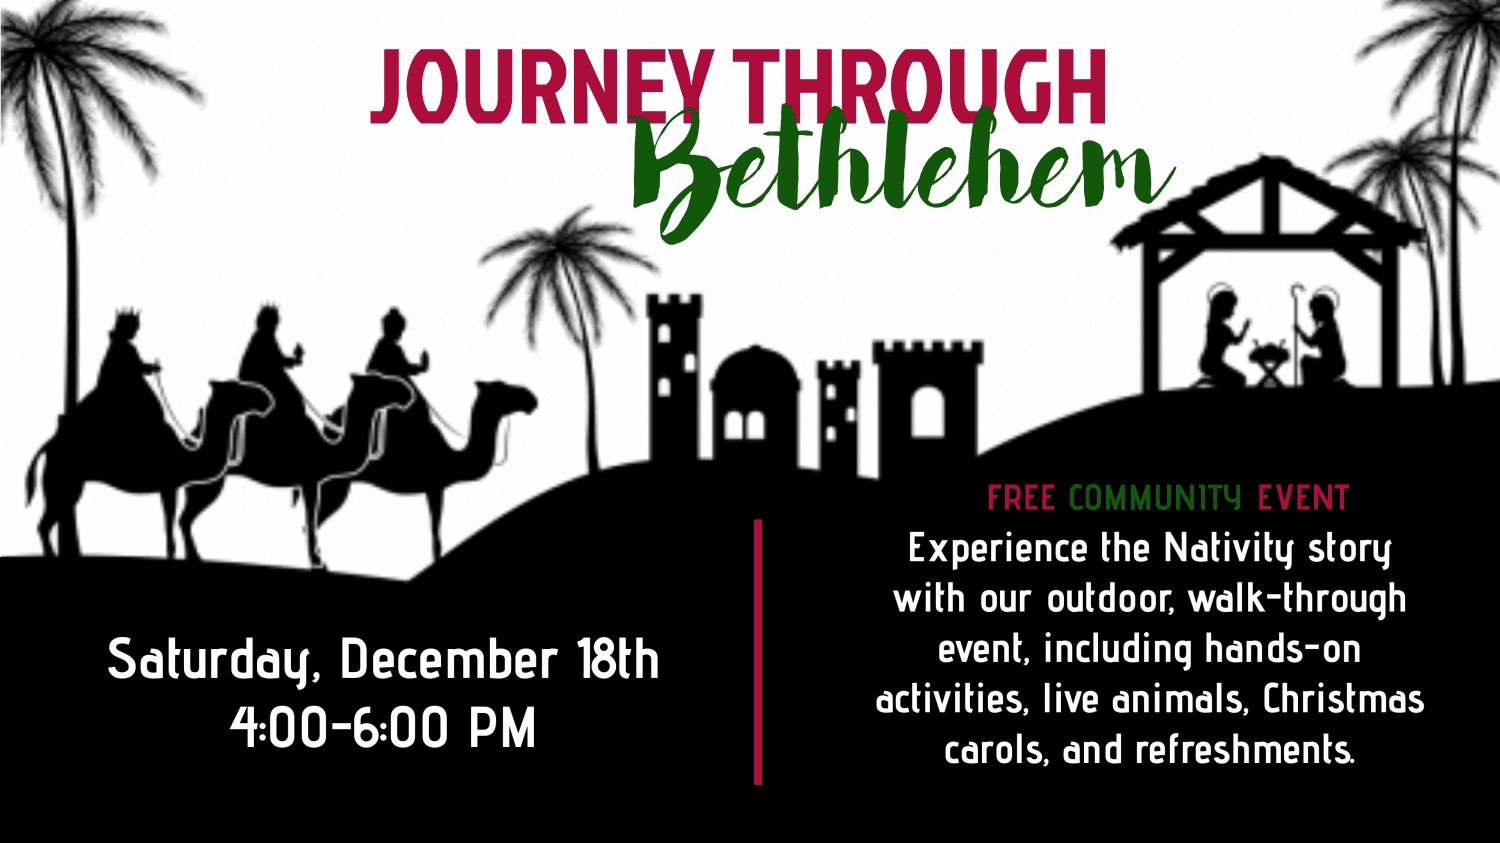 A Journey Through Bethlehem